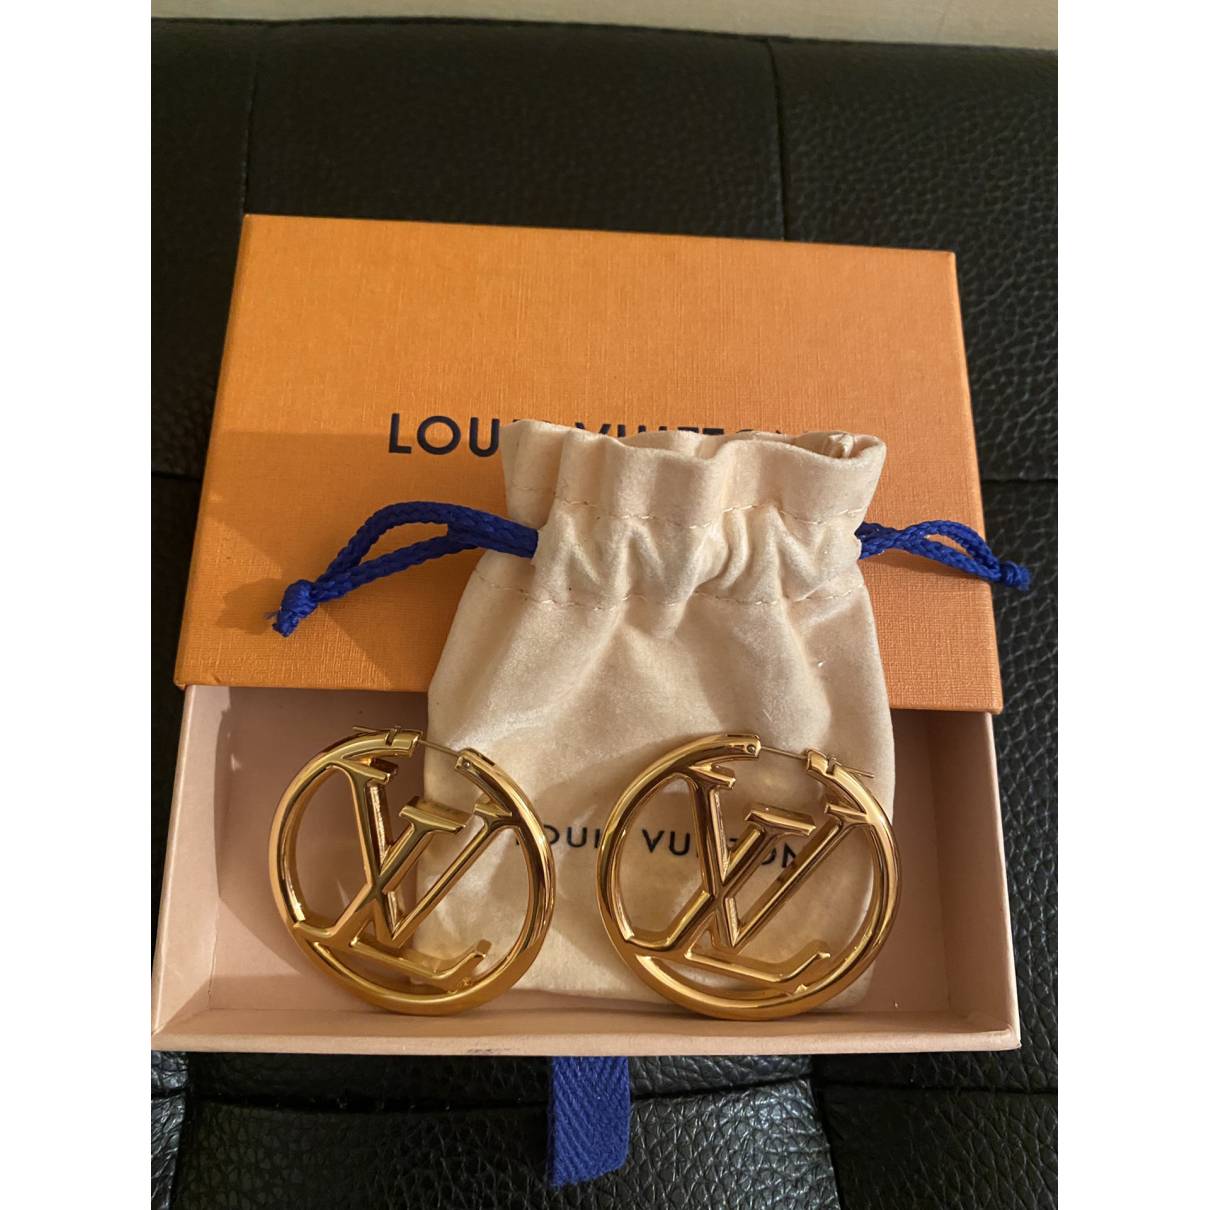 Louis Vuitton Womens Louise Earrings Golden Finish Brass – Luxe